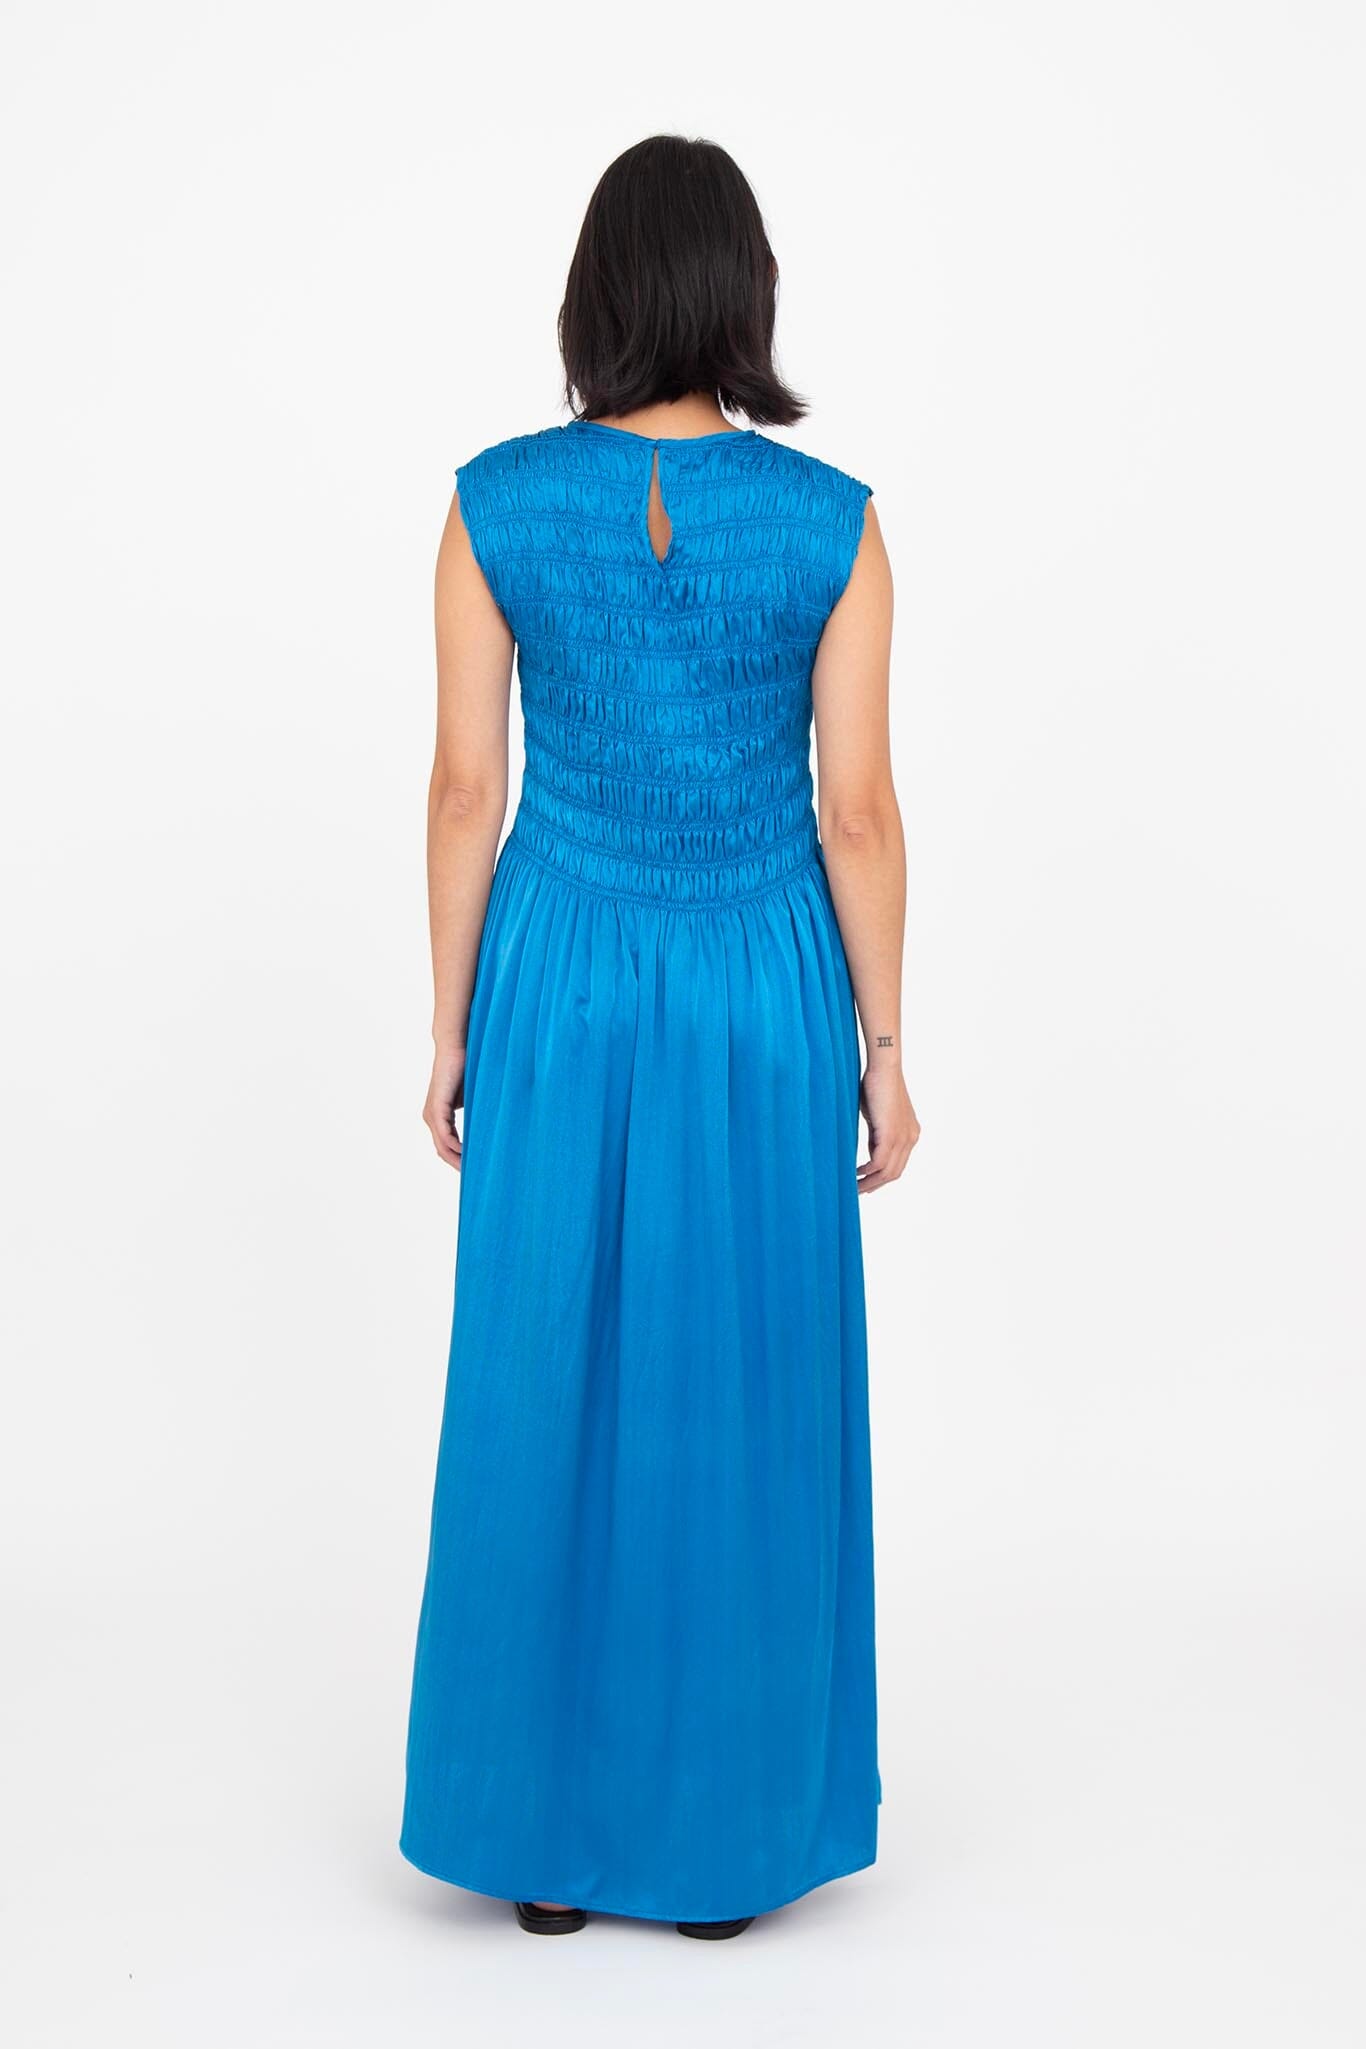 M.PATMOS Aliya Dress - Vibrant Blue